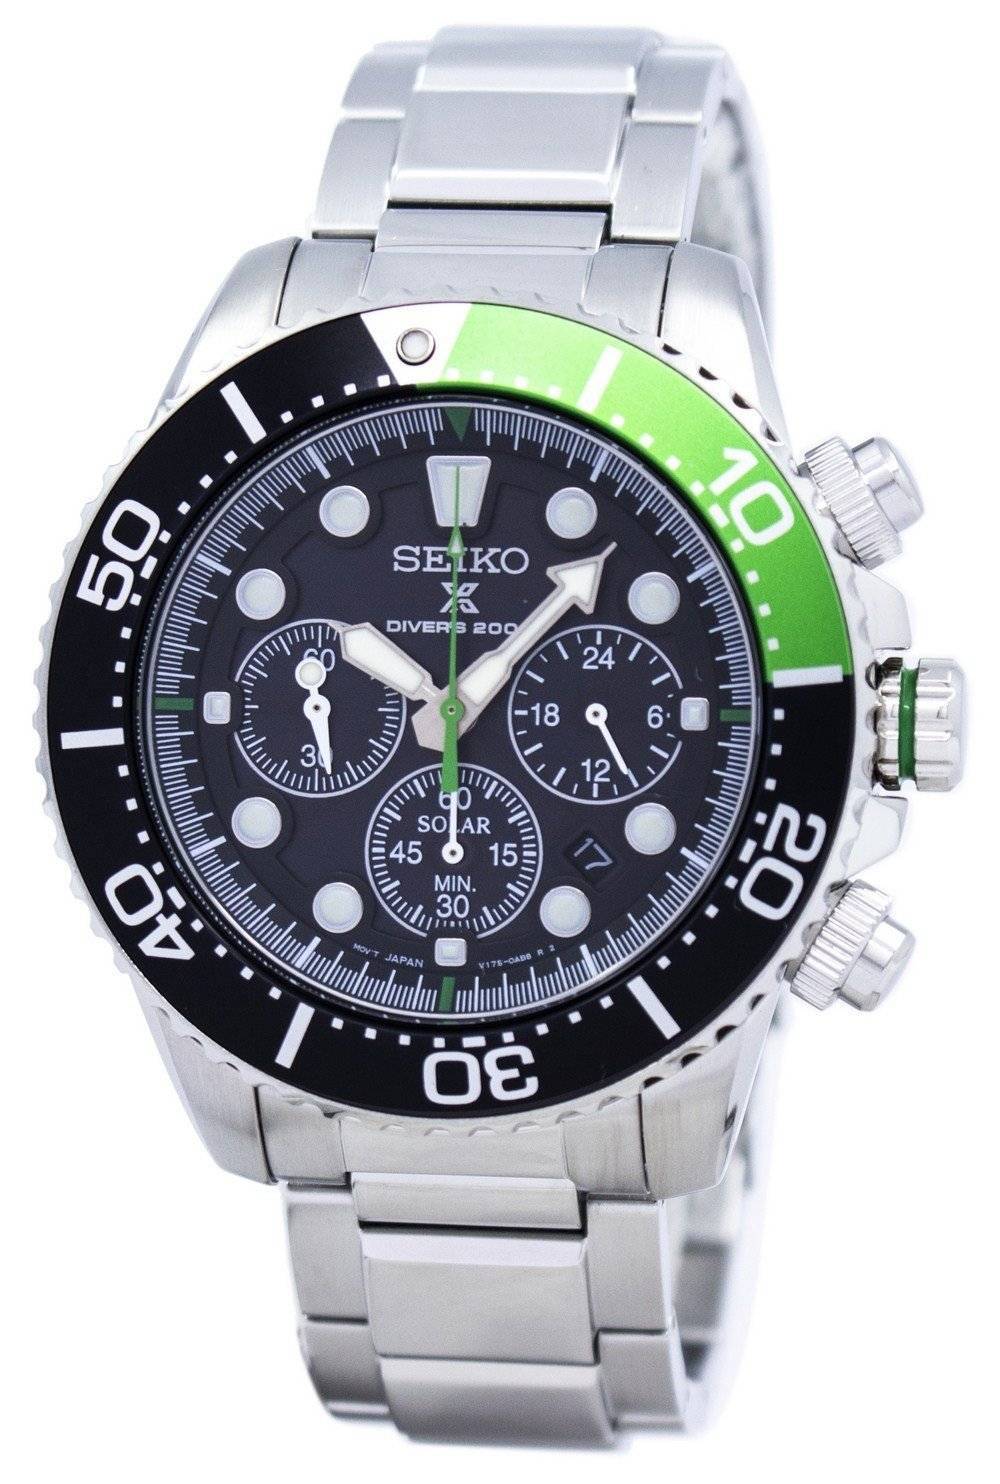 Đồng hồ đeo tay nam Seiko Prospex Diver's Solar Chronograph 200M SSC615  SSC615P1 SSC615P vi